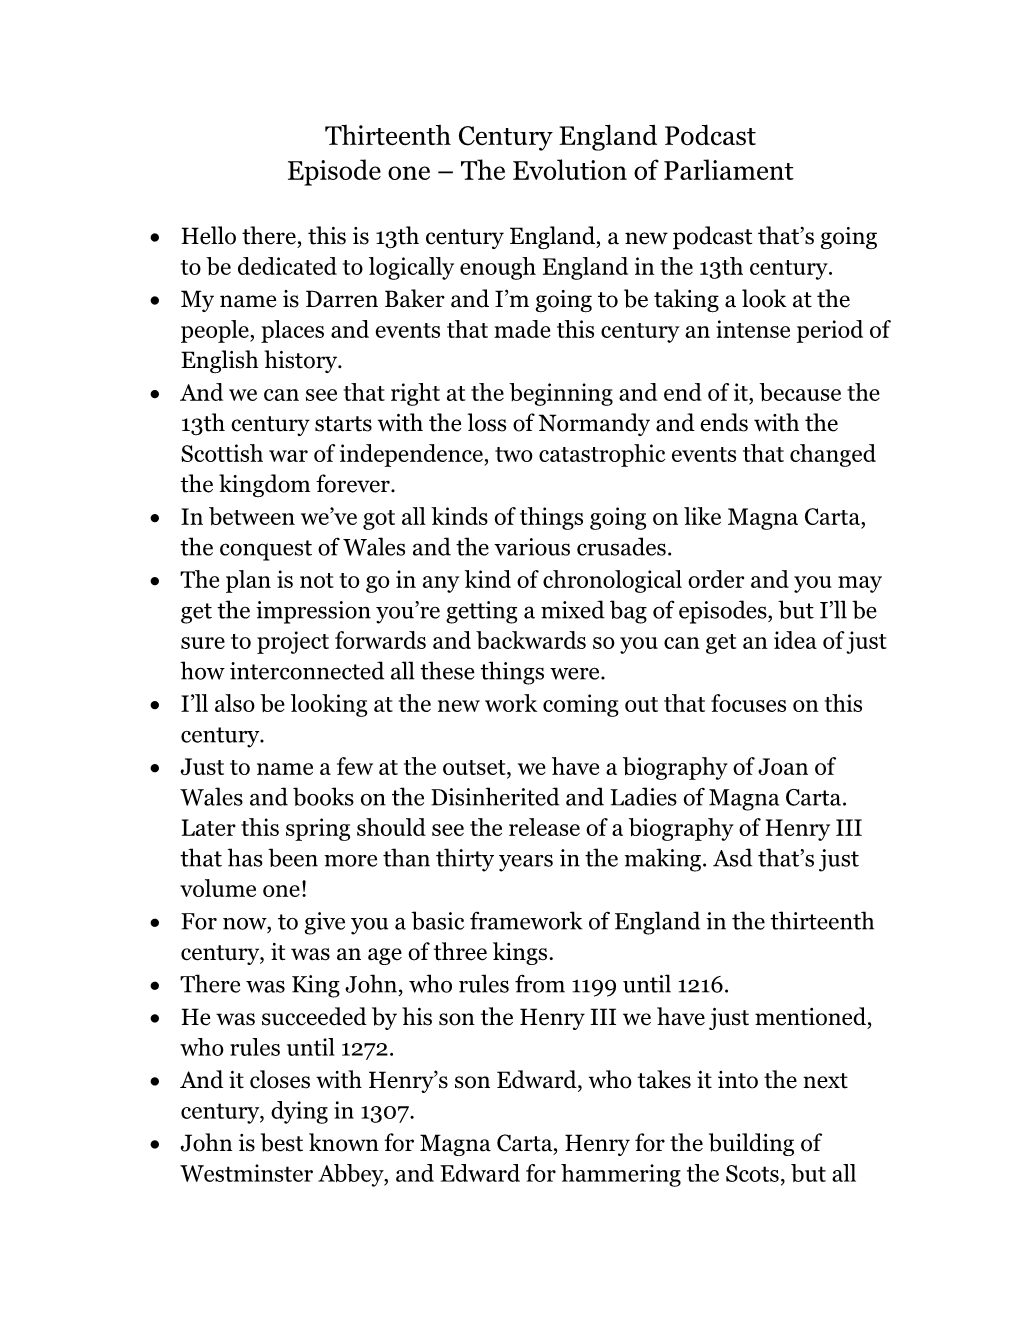 Thirteenth Century England Podcast Episode One – the Evolution of Parliament